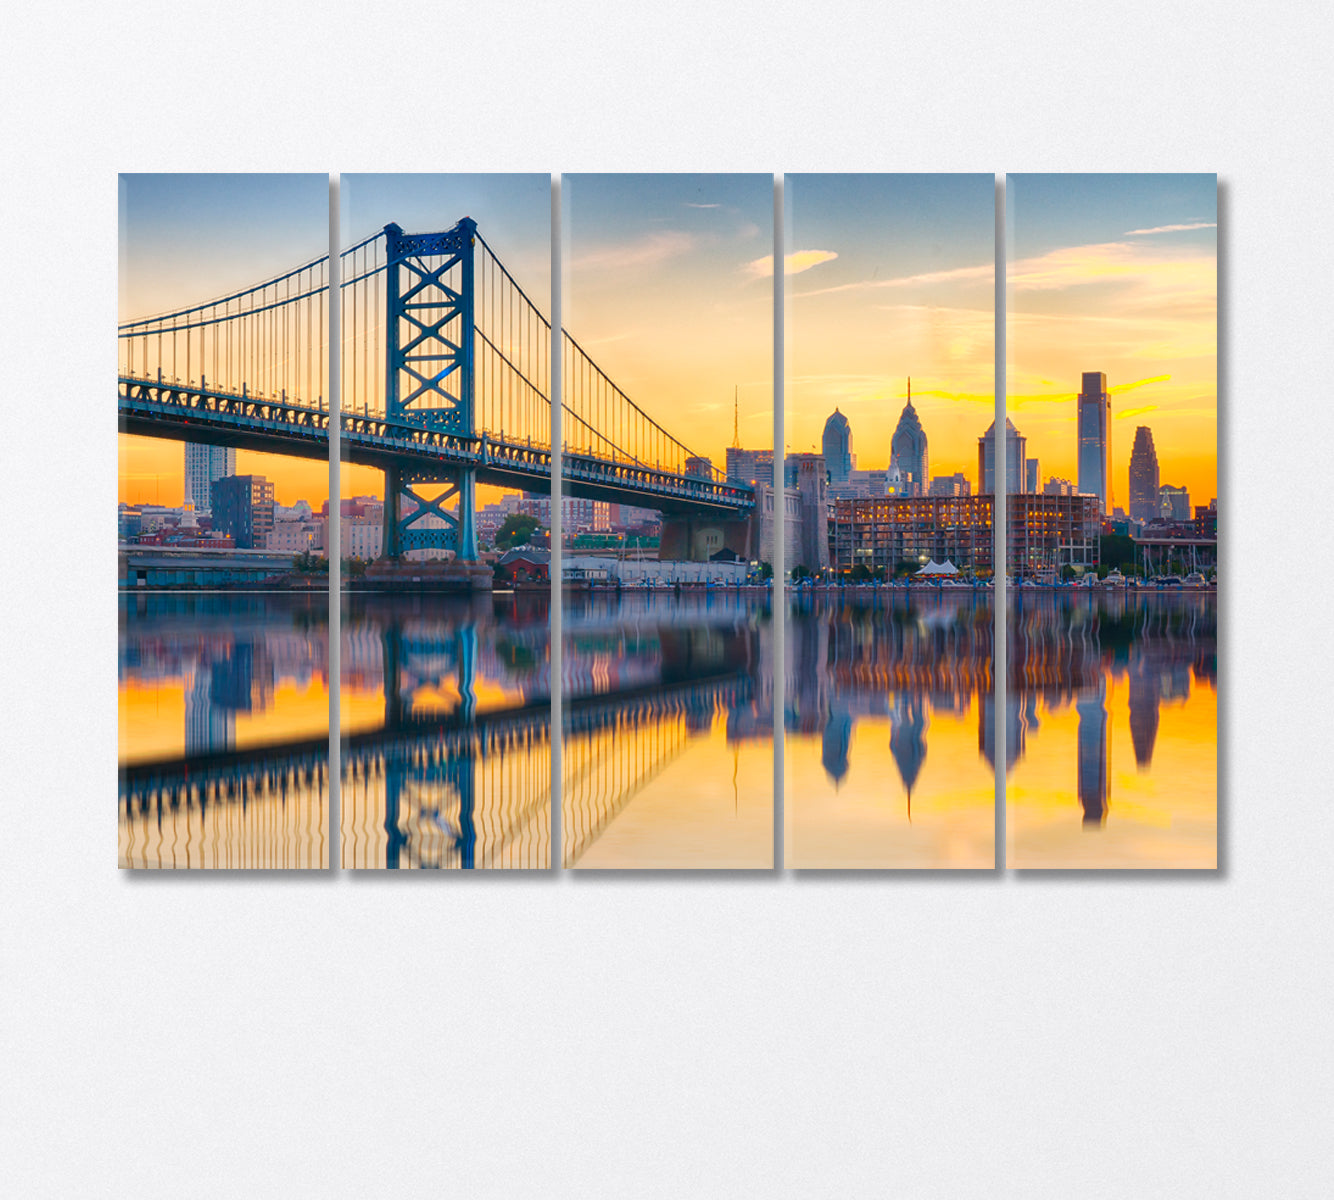 Sunset over Philadelphia and Ben Franklin Bridge Canvas Print-Canvas Print-CetArt-5 Panels-36x24 inches-CetArt